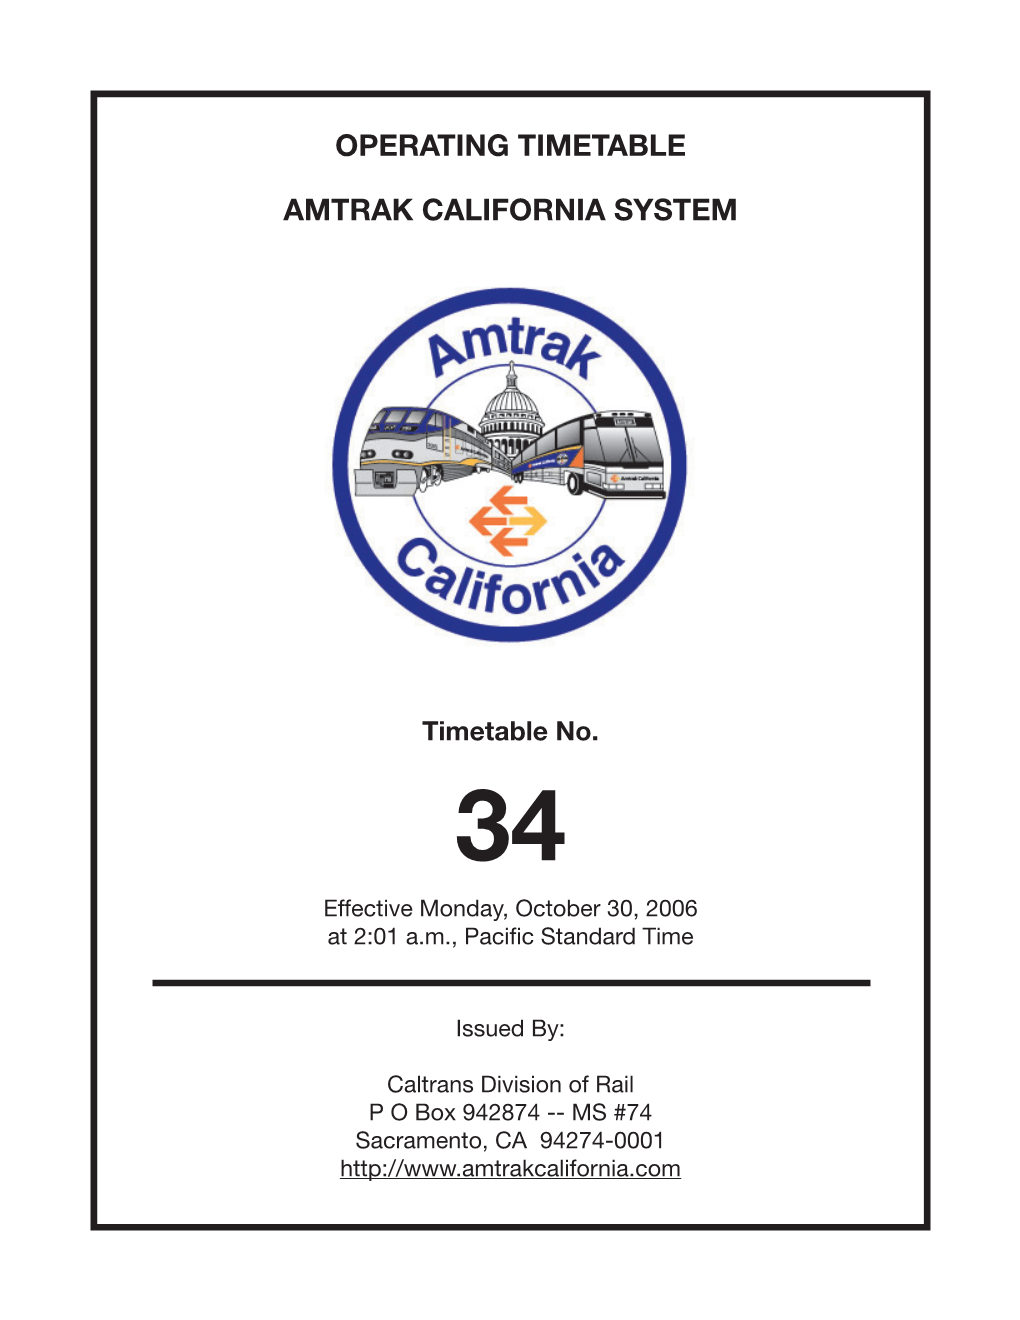 Operating Timetable Amtrak California System